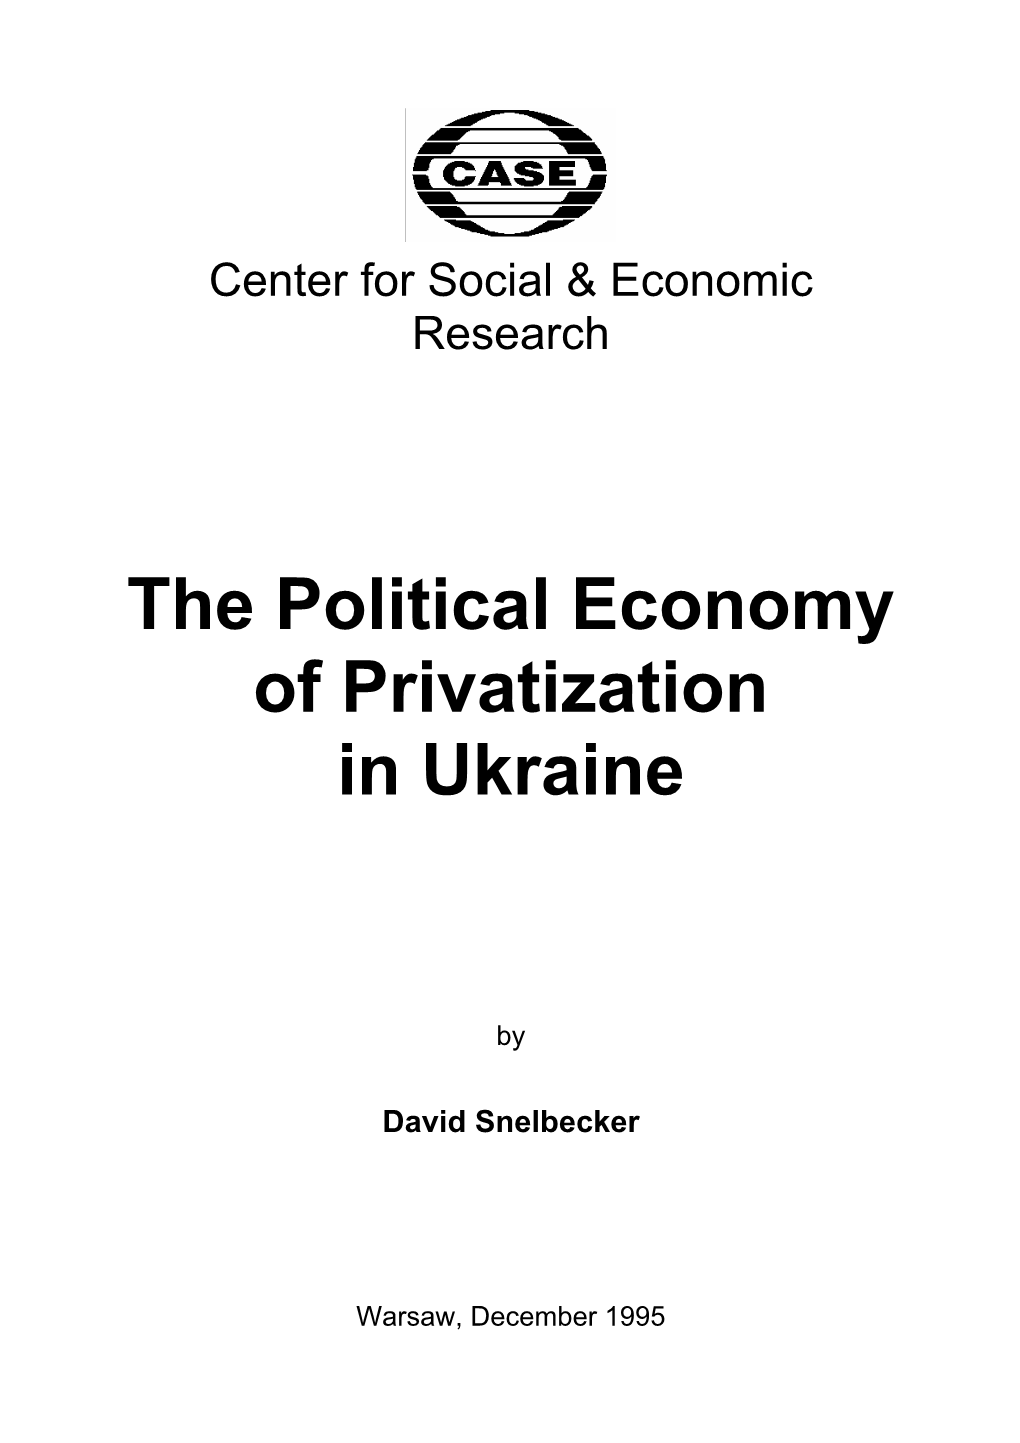 The Political Economy of Privatization in Ukraine